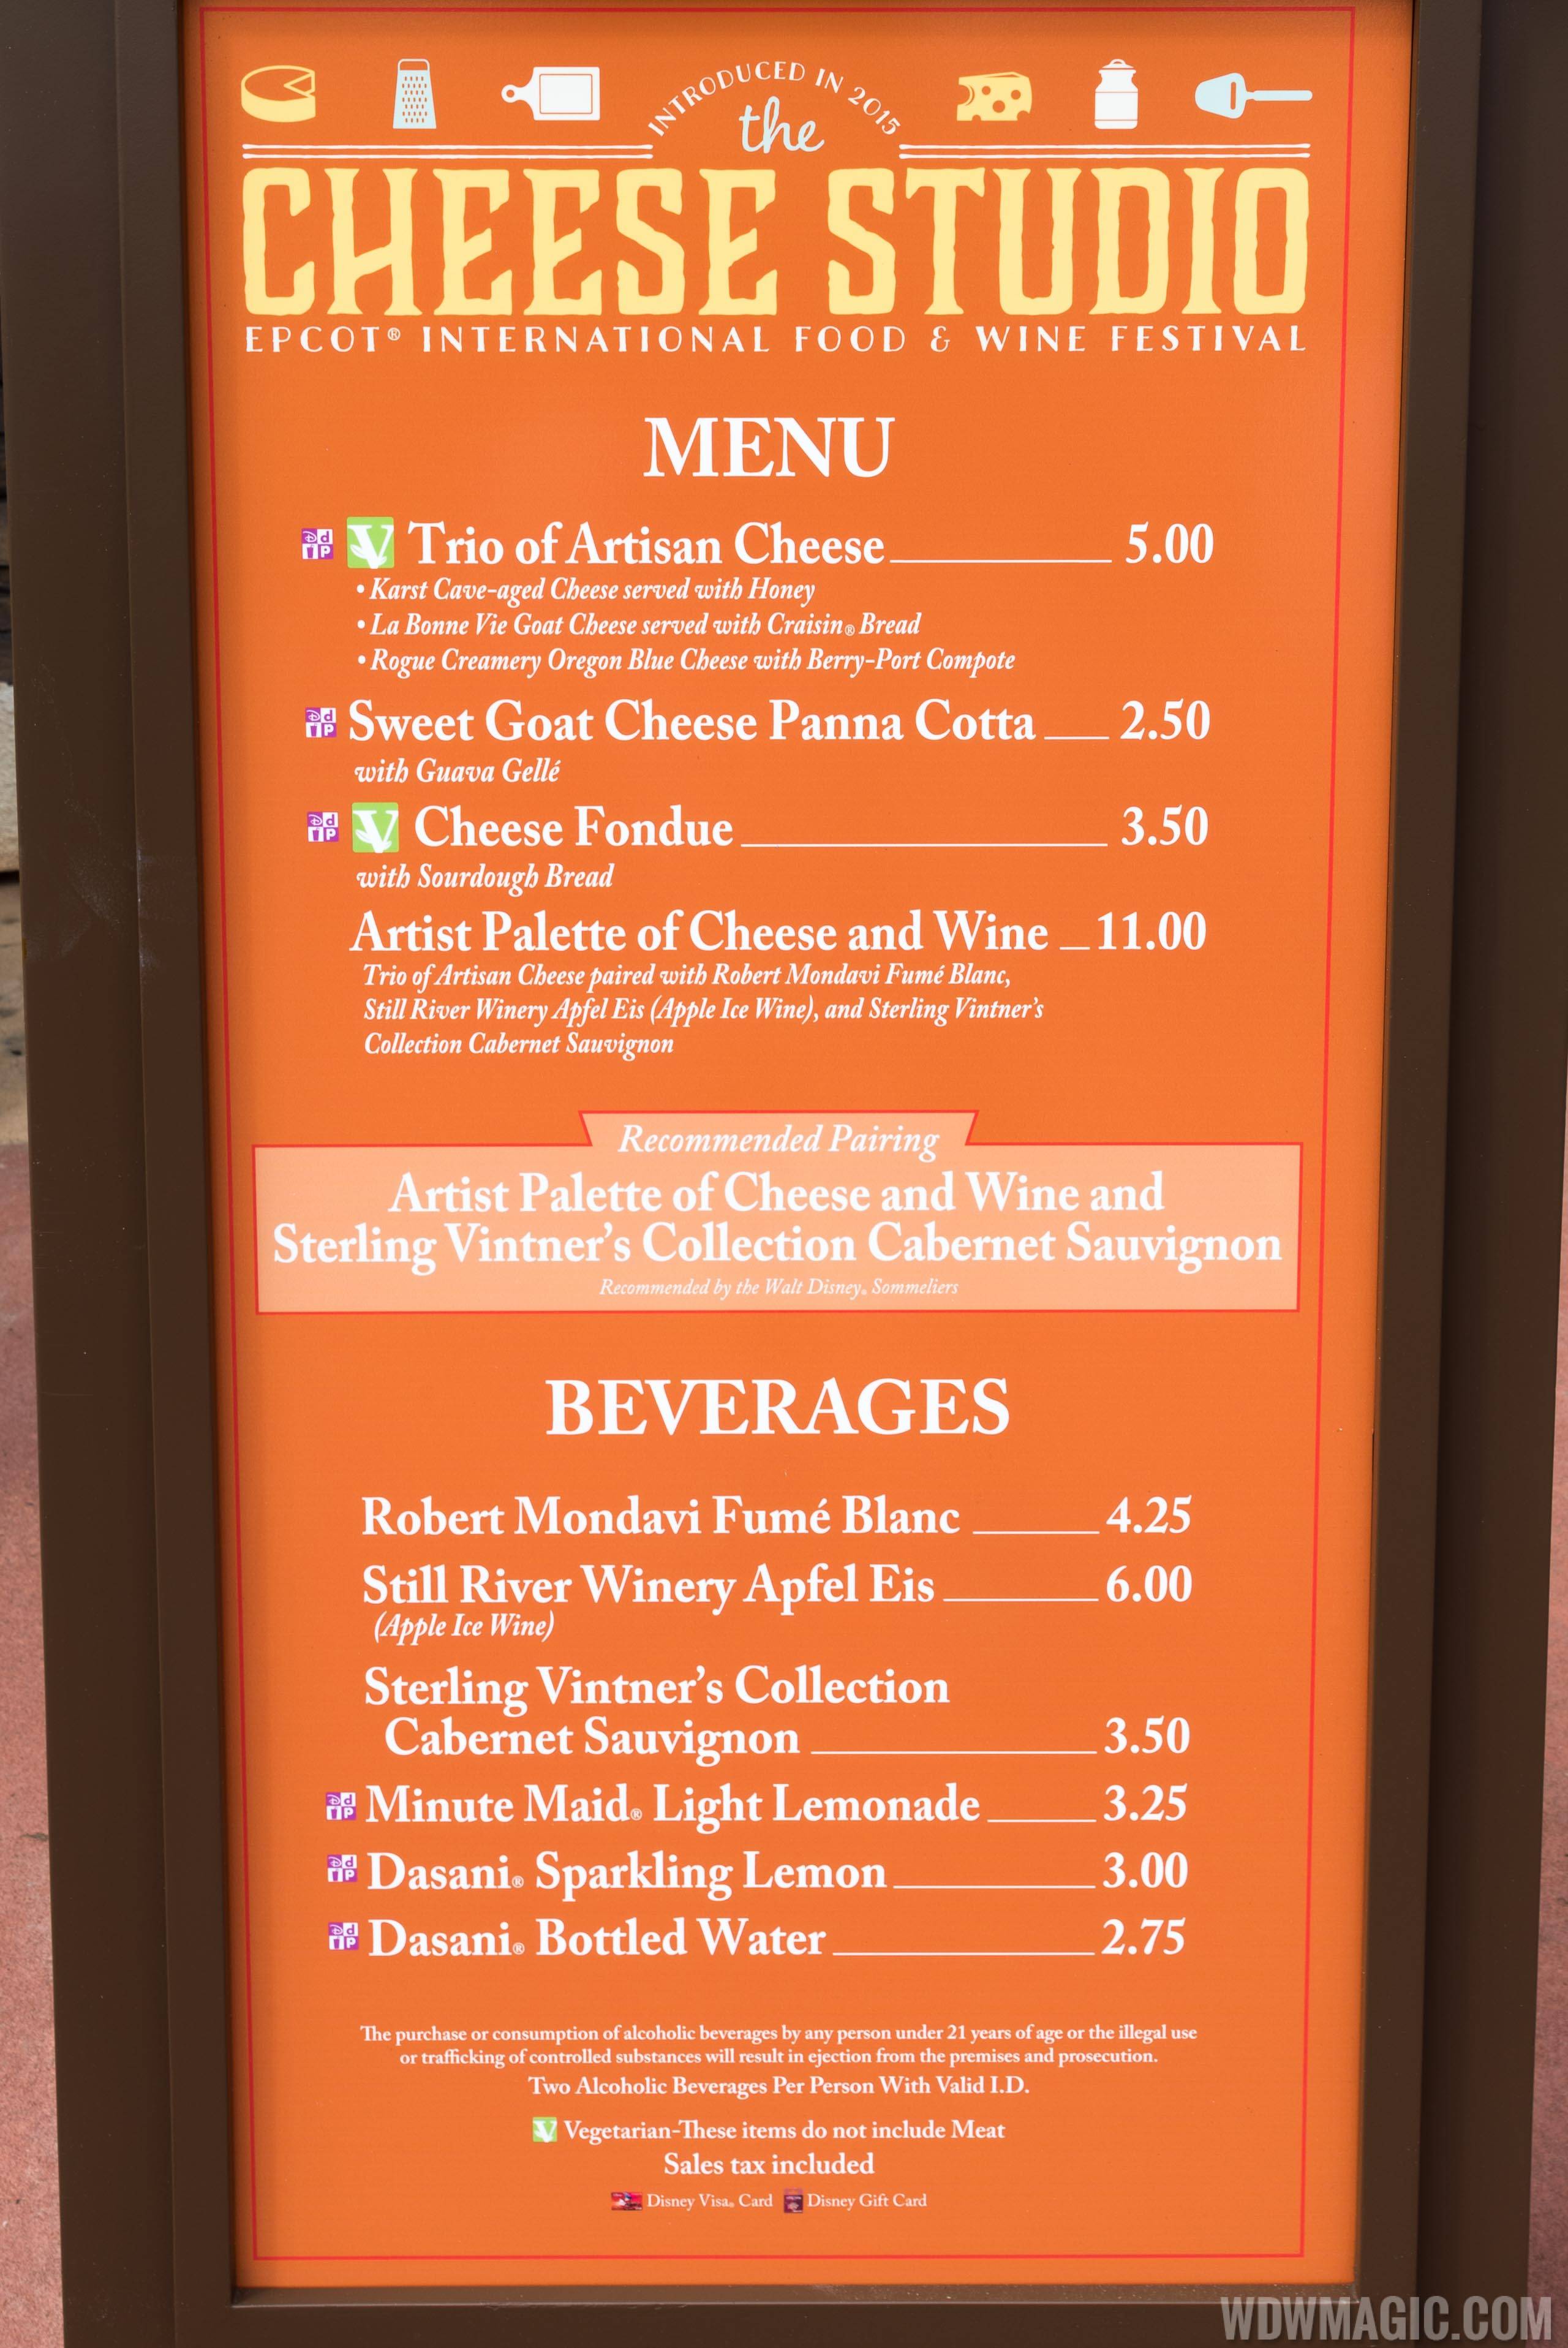 2015 Epcot Food and Wine Festival Marketplace kiosk - Cheese Studio menu